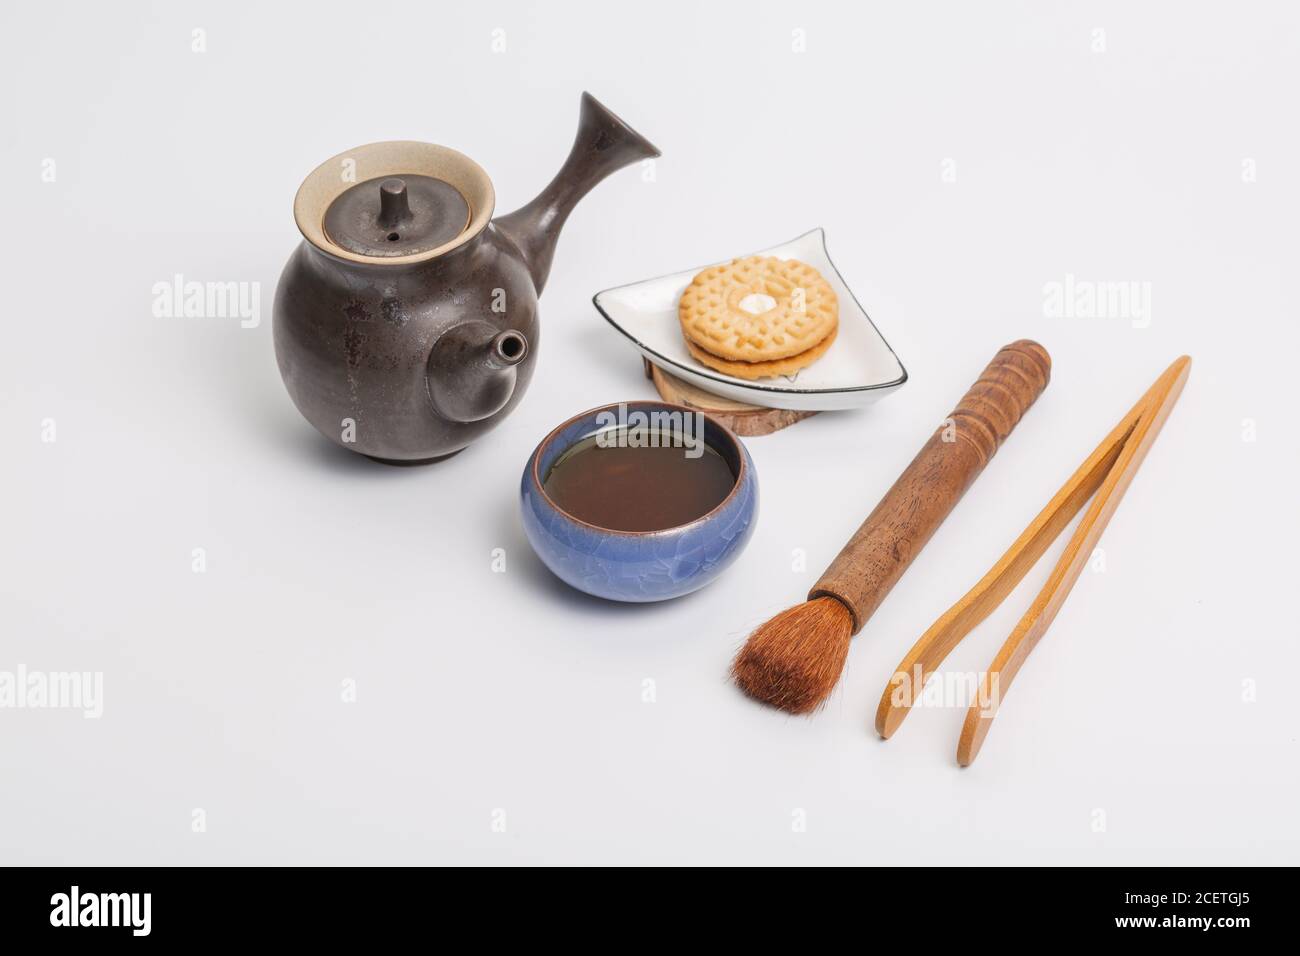 Traditional Tea Set Tray Modern Transparent Pot Clear Small Cup Stock Photo  by ©lynn.ku56@gmail.com 649081762